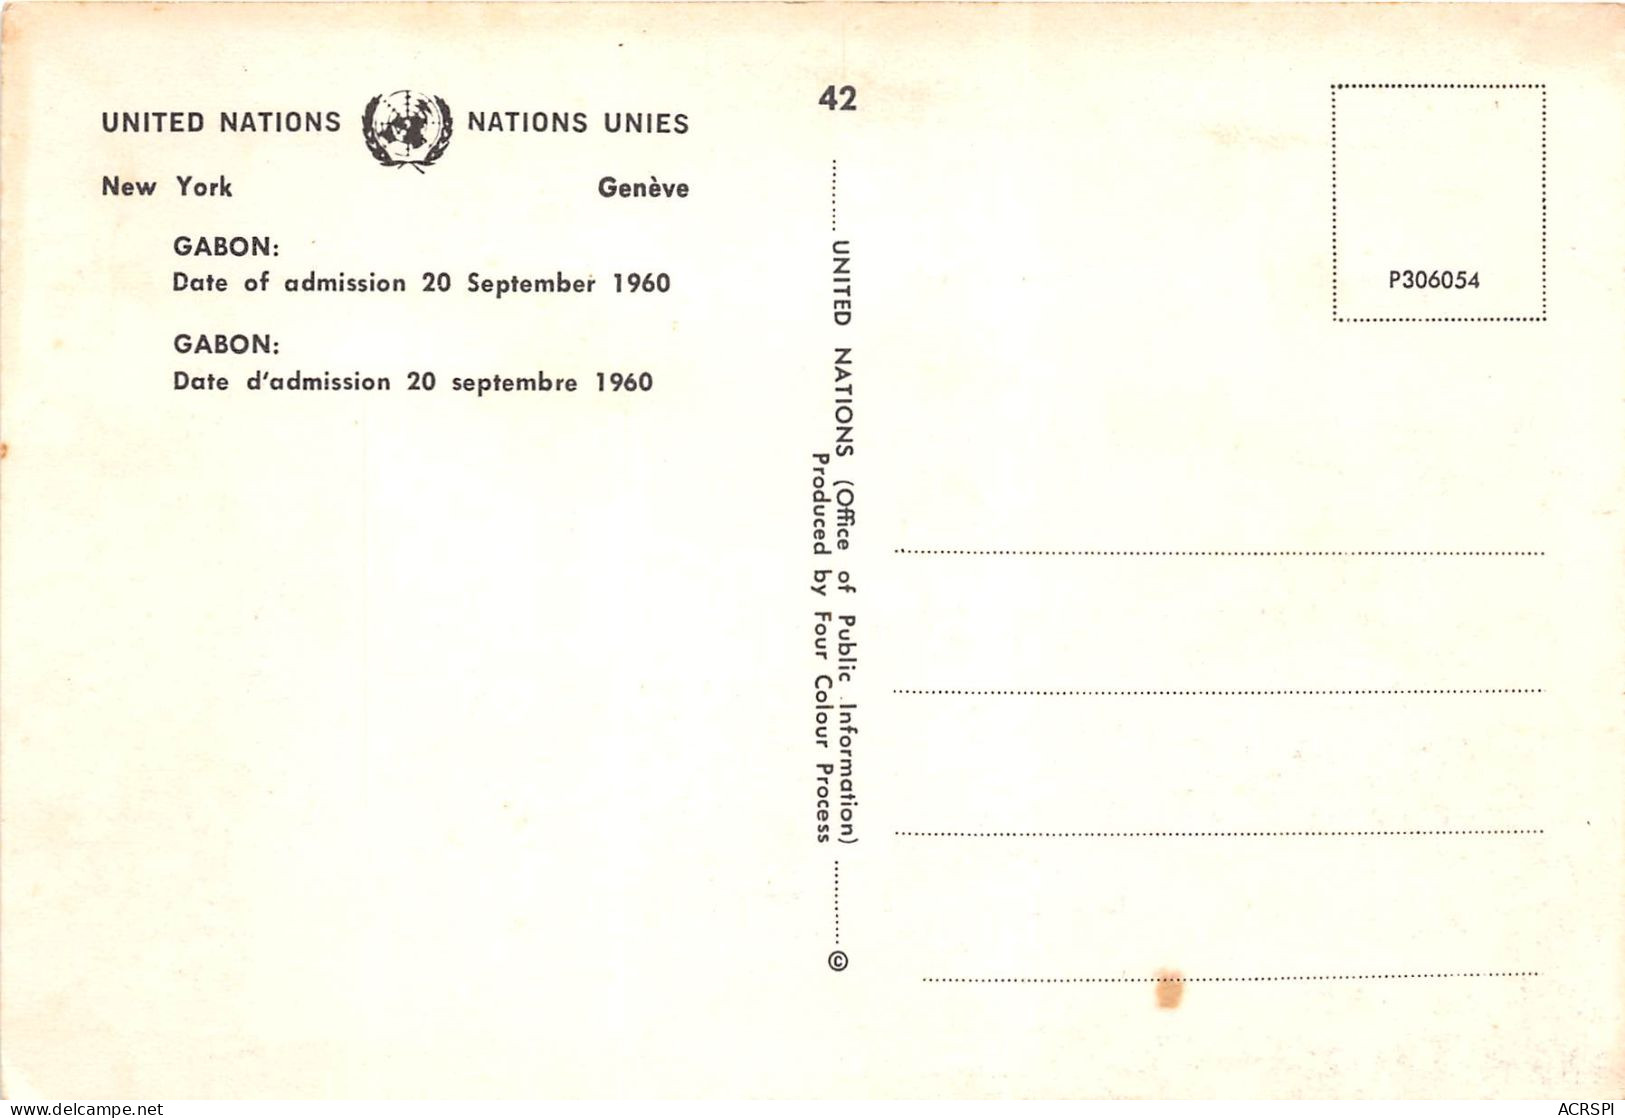 GABON United Nations 1960 Carte 3 New York  Nations Unies  (scan Recto-verso) OO 0961 - Gabon